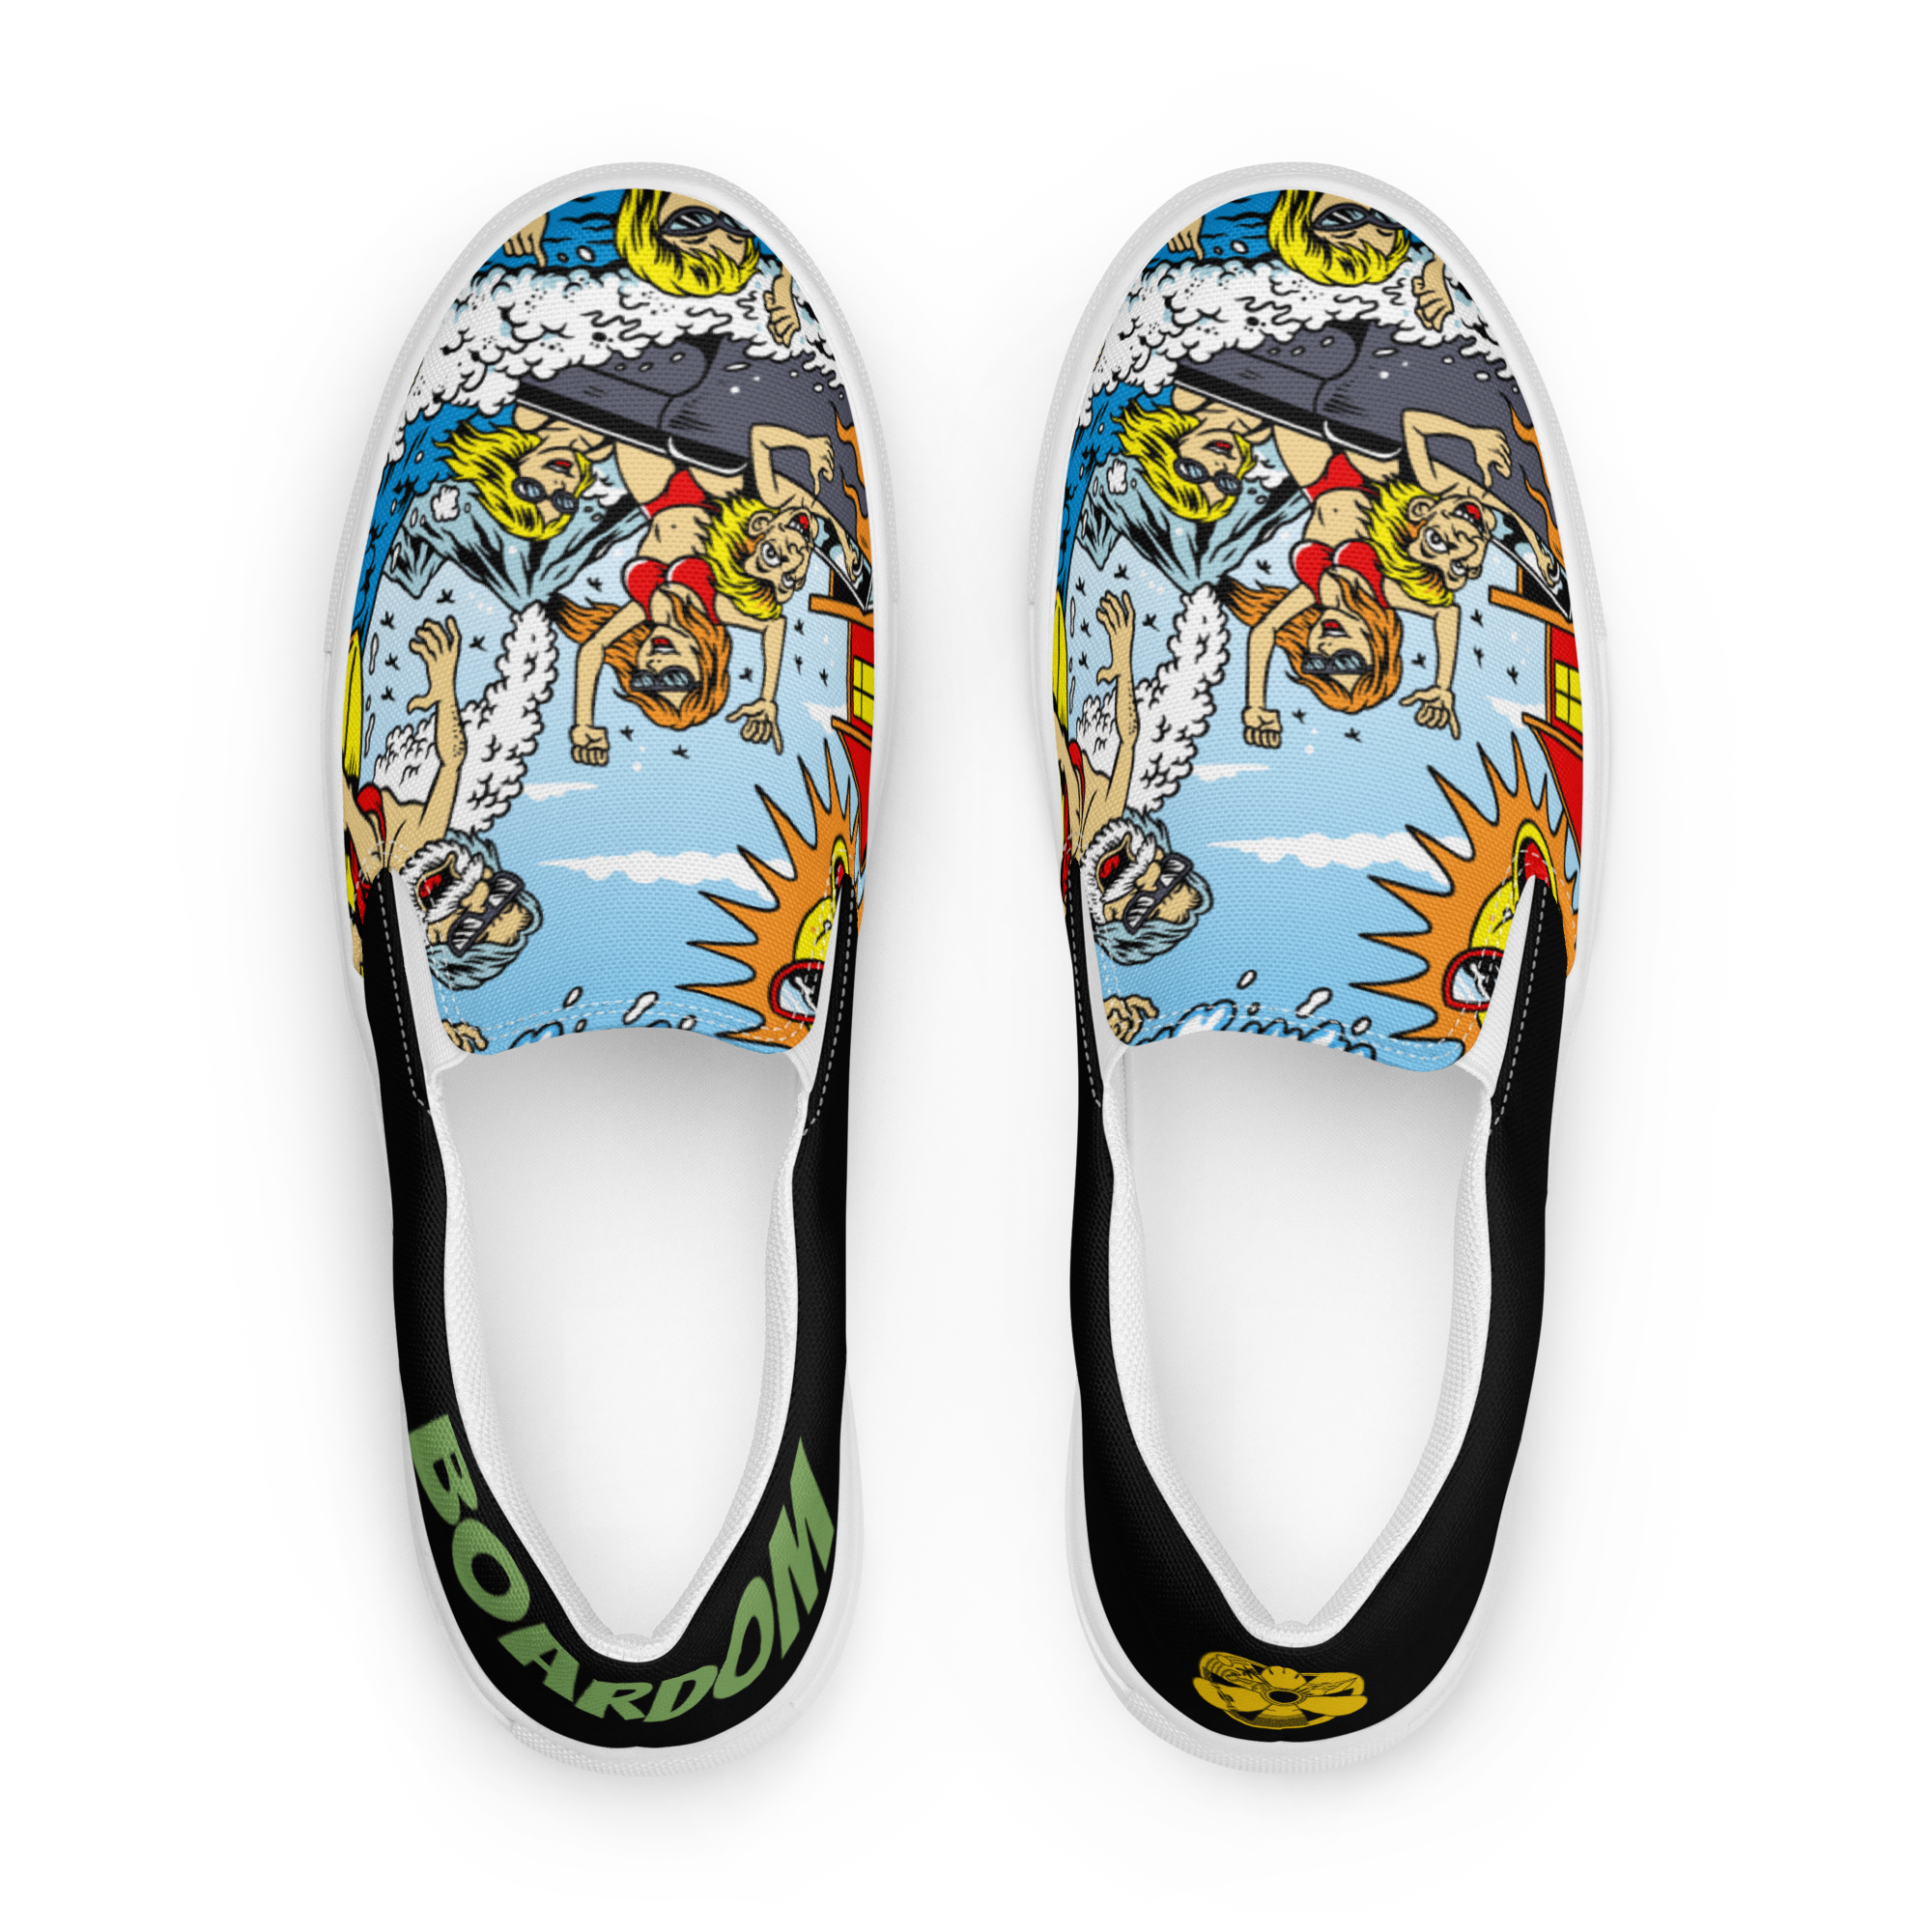 Boardom Lake Life slip-on canvas shoes